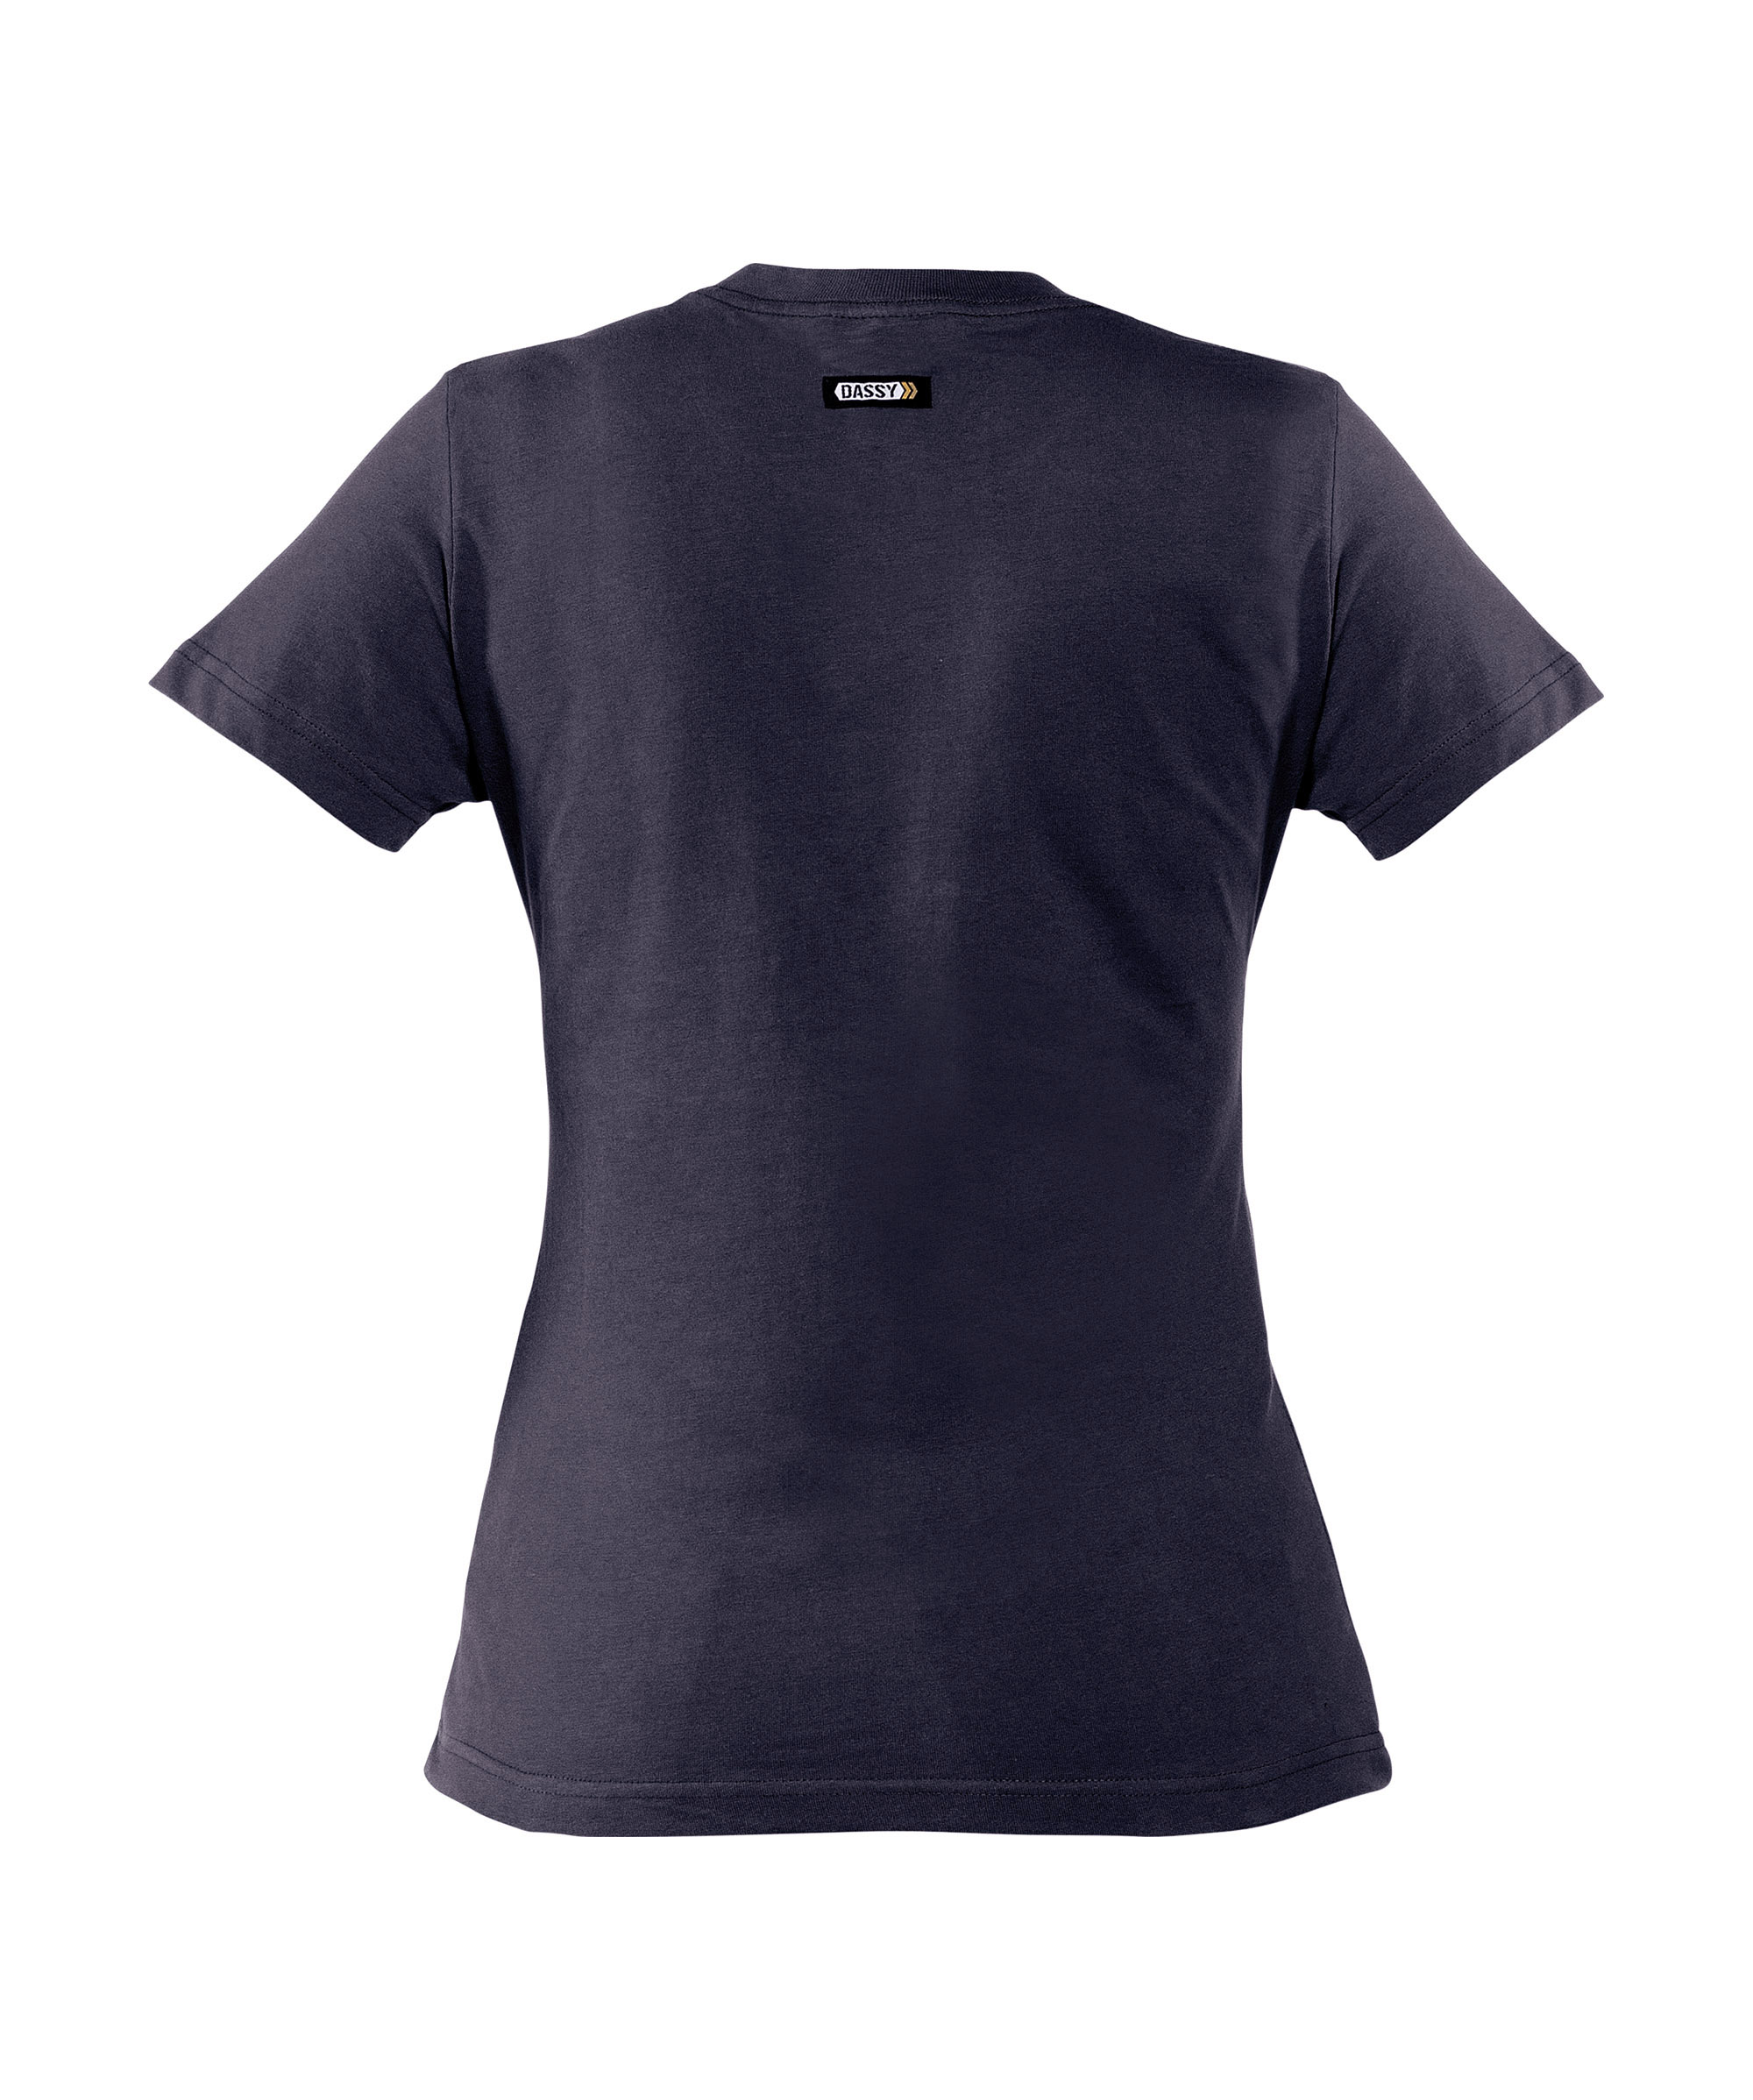 oscar-women_t-shirt_navy_back.jpg